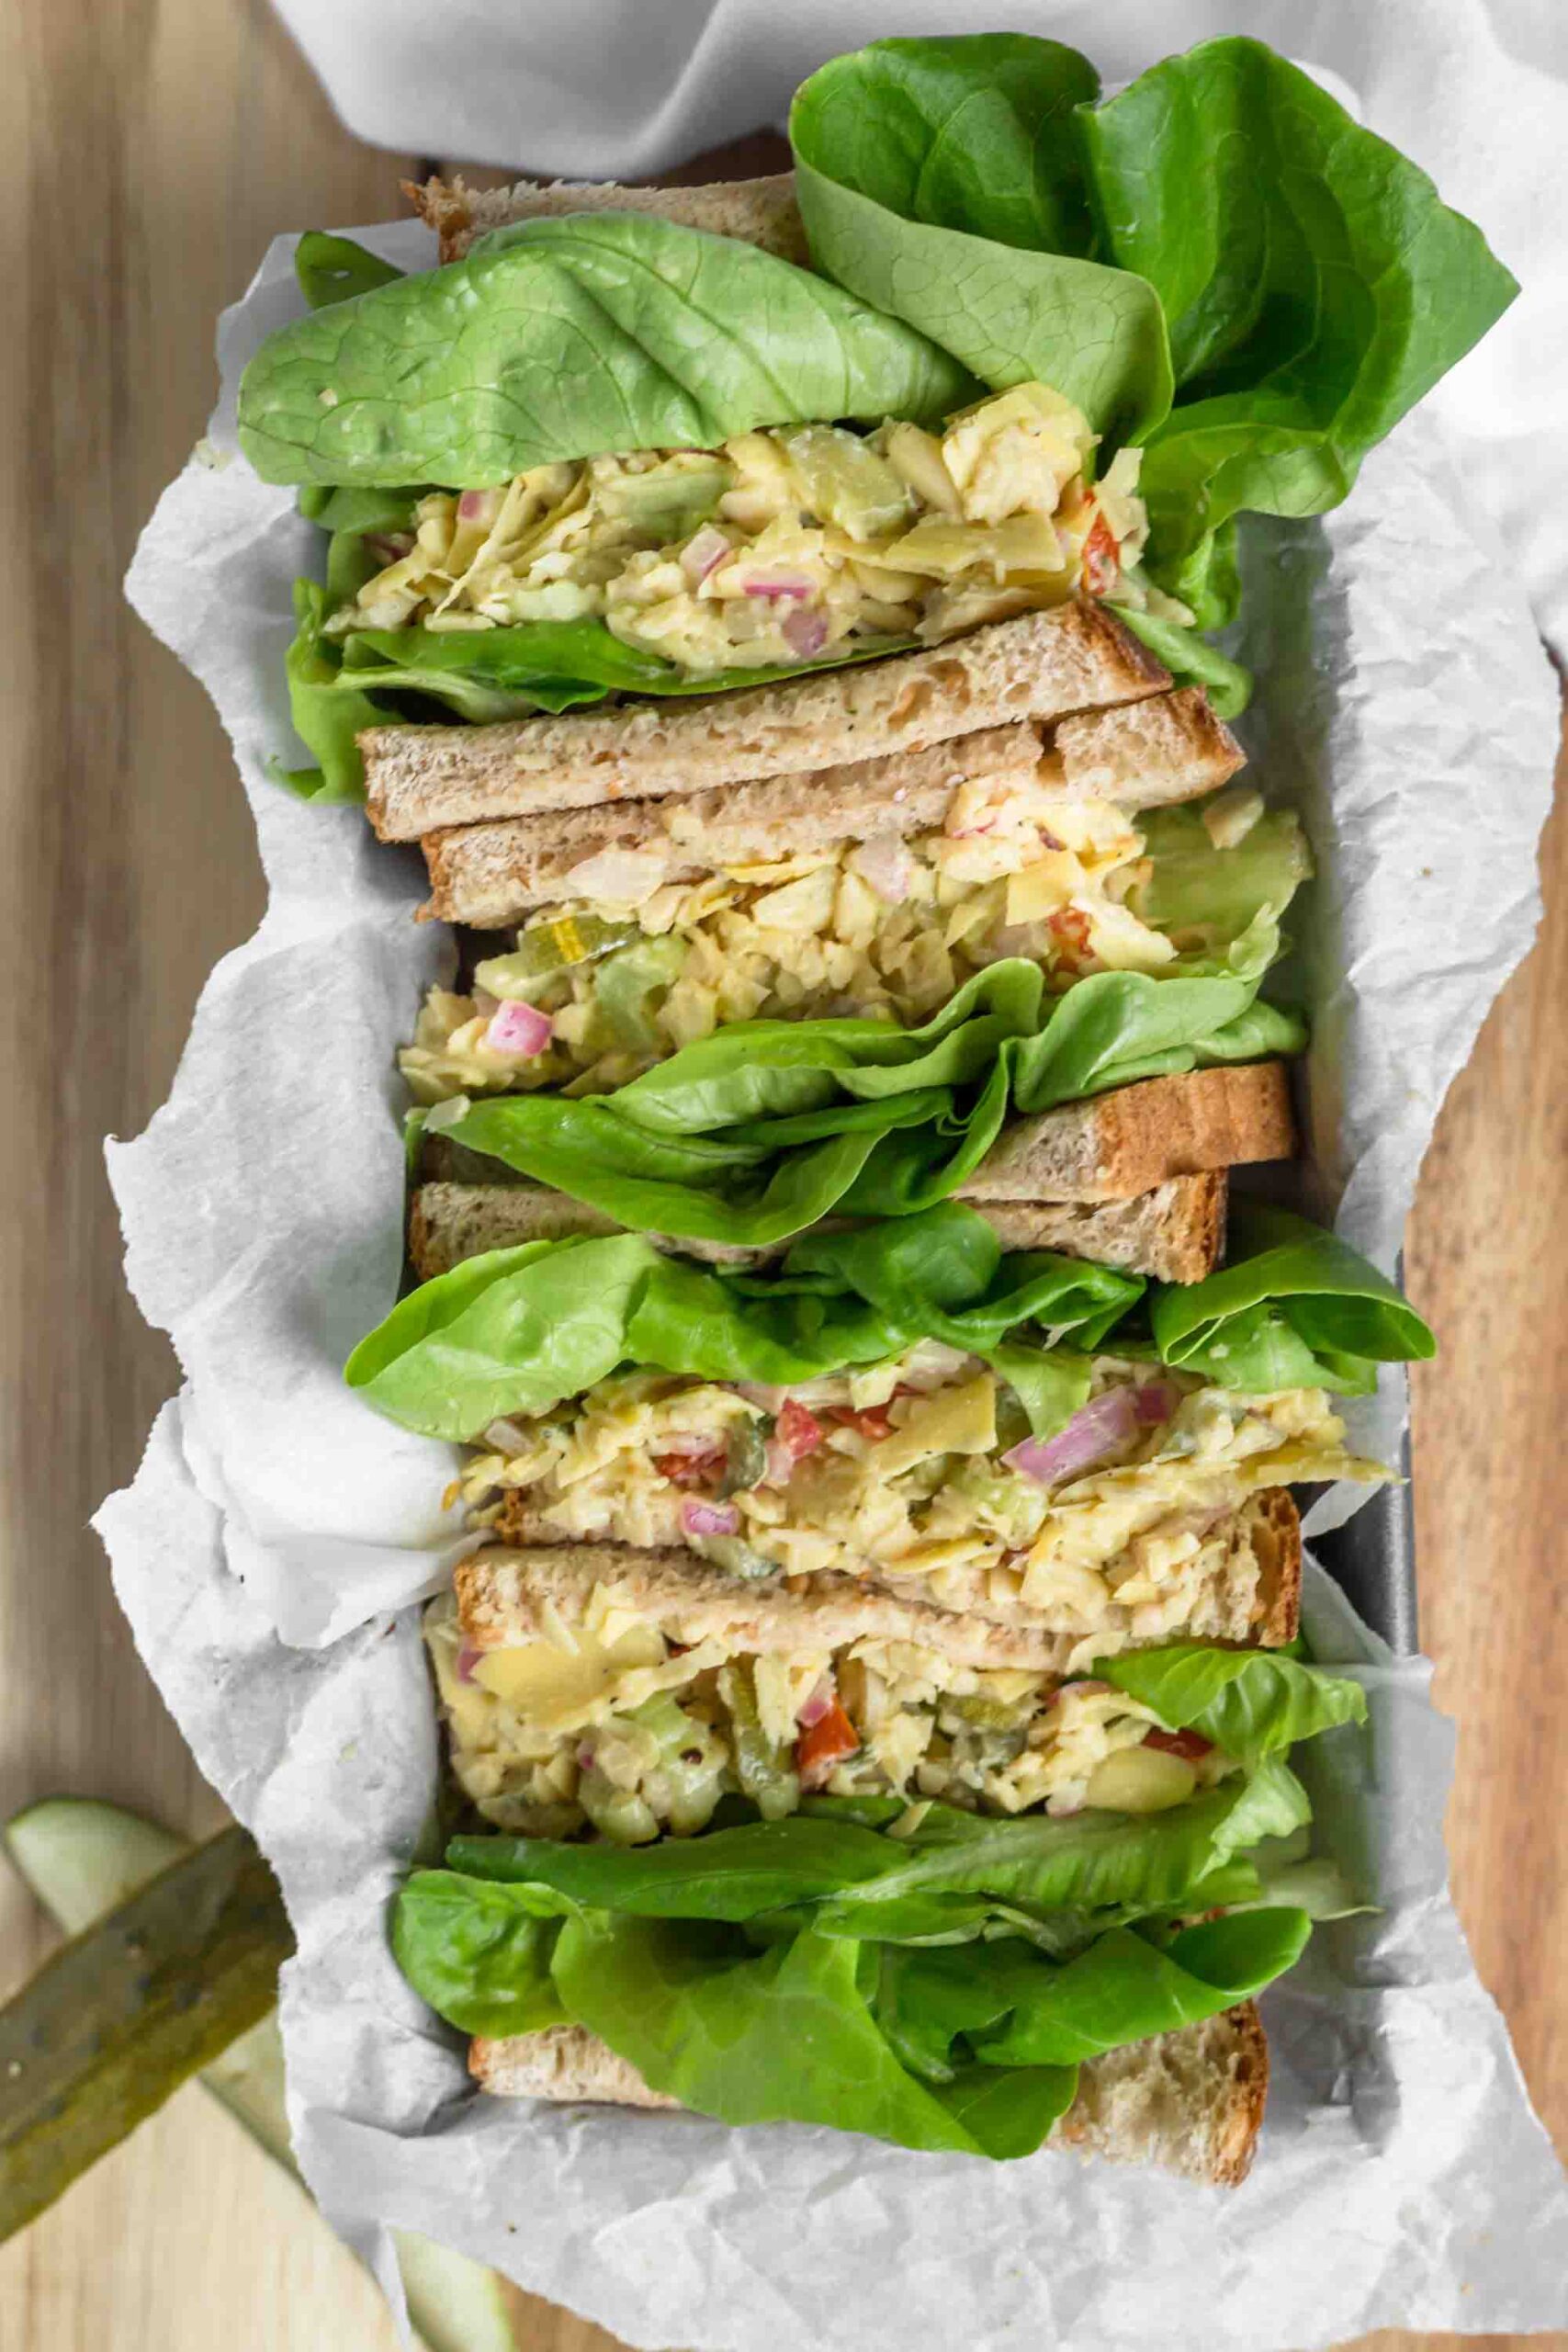 Vegan Sandwich Recipe for veggie tuna salad made with artichokes